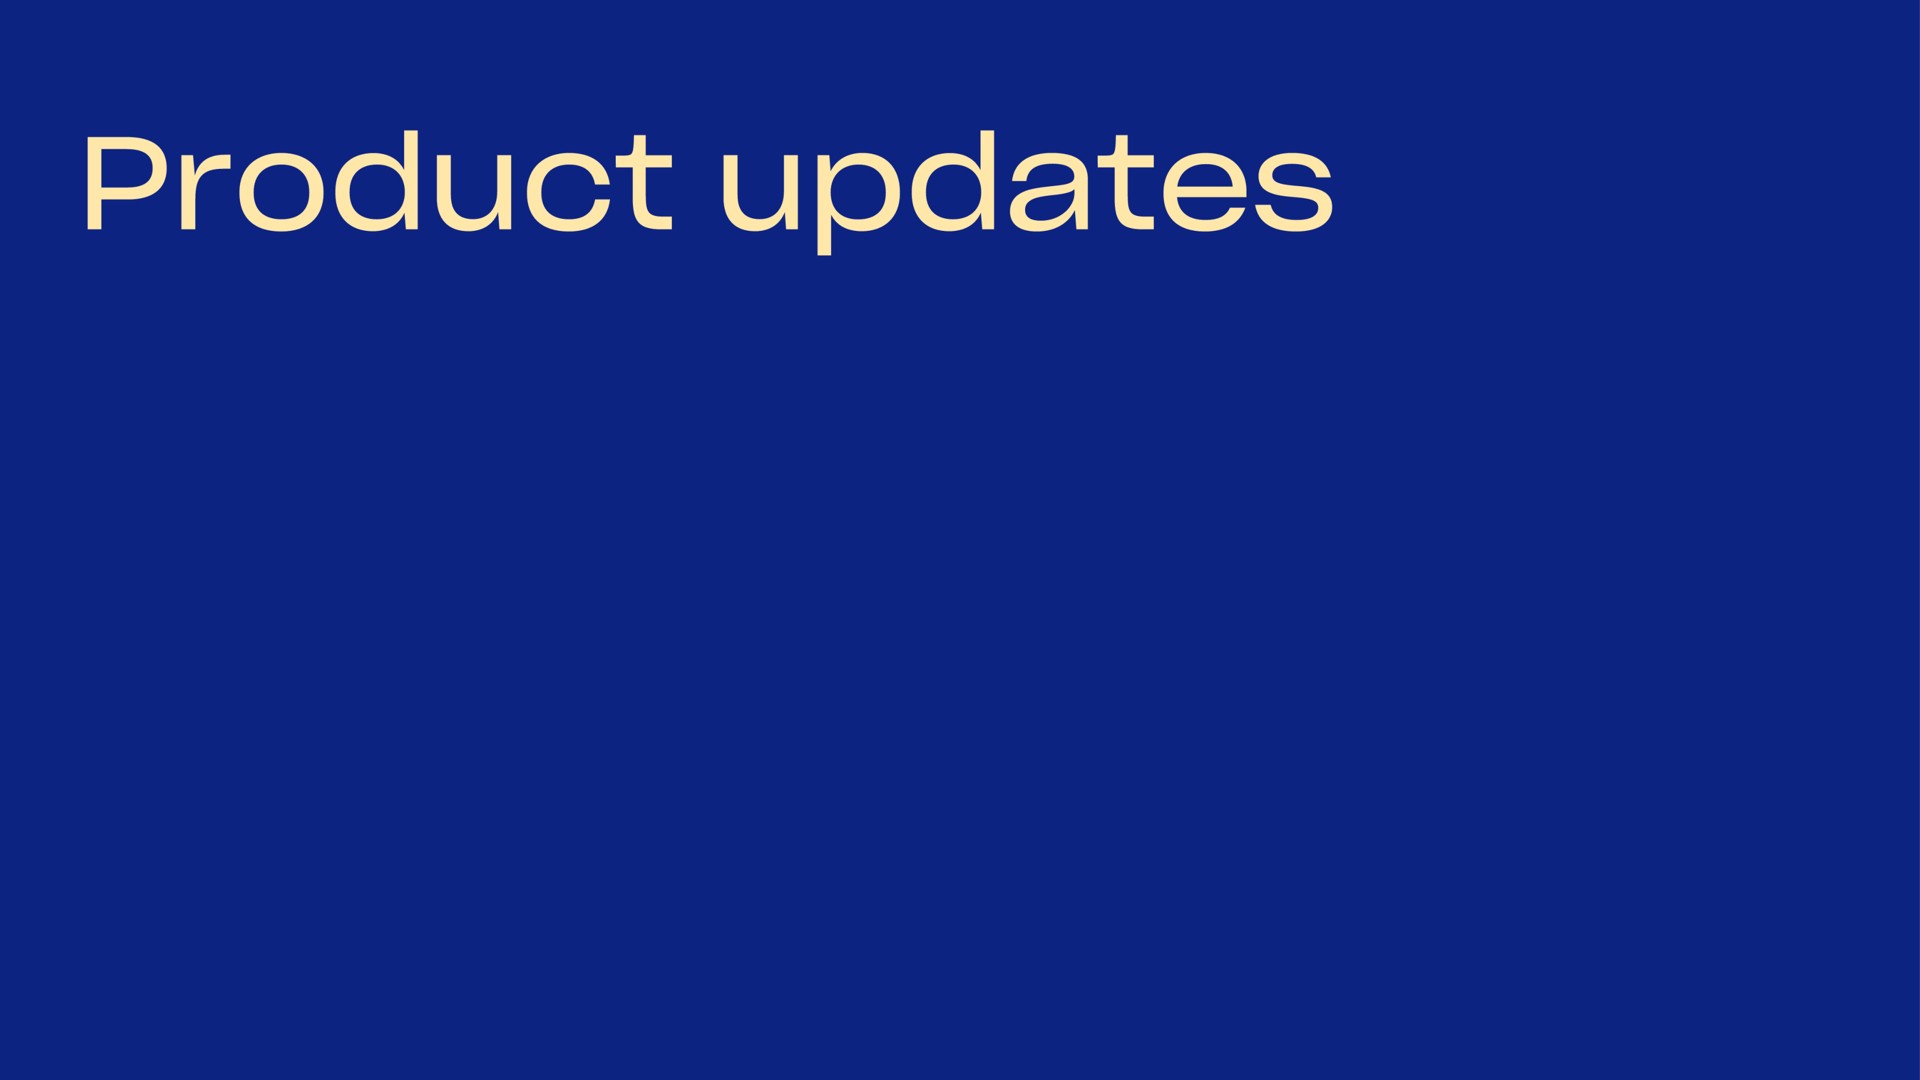 product updates | Dropbox